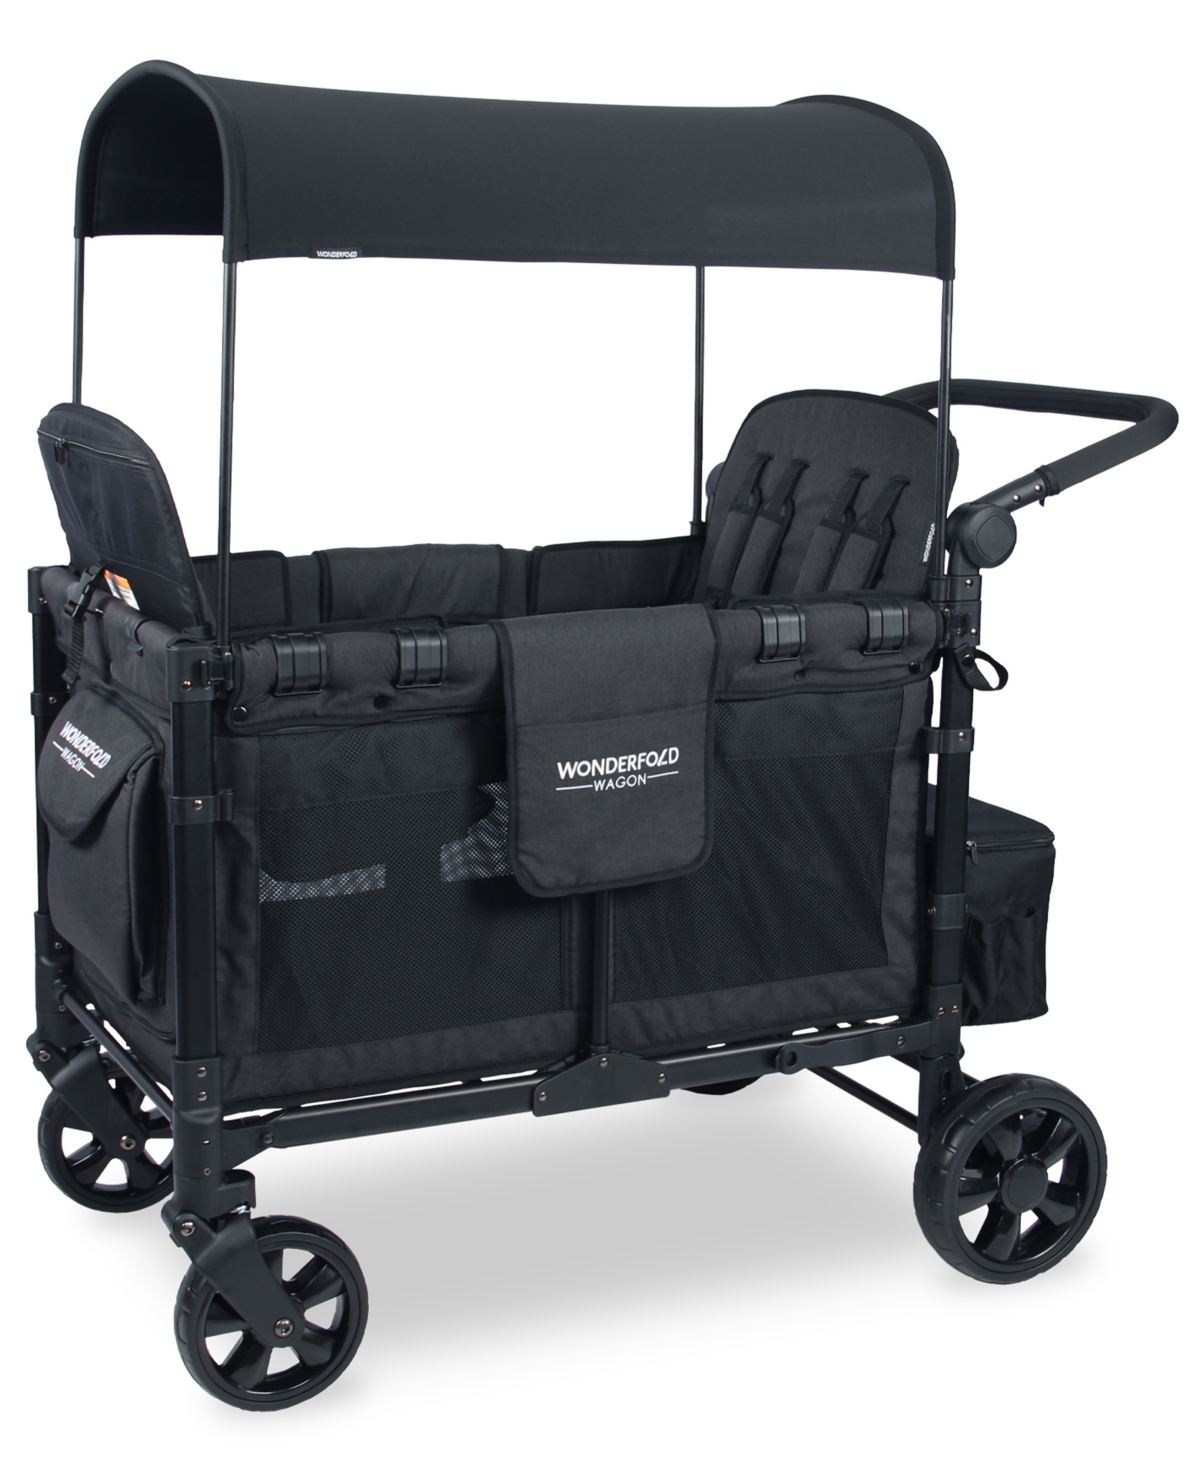 Wonderfold Wagon W4 Elite Front Zippered Quad Stroller Wagon In Volcanic Black